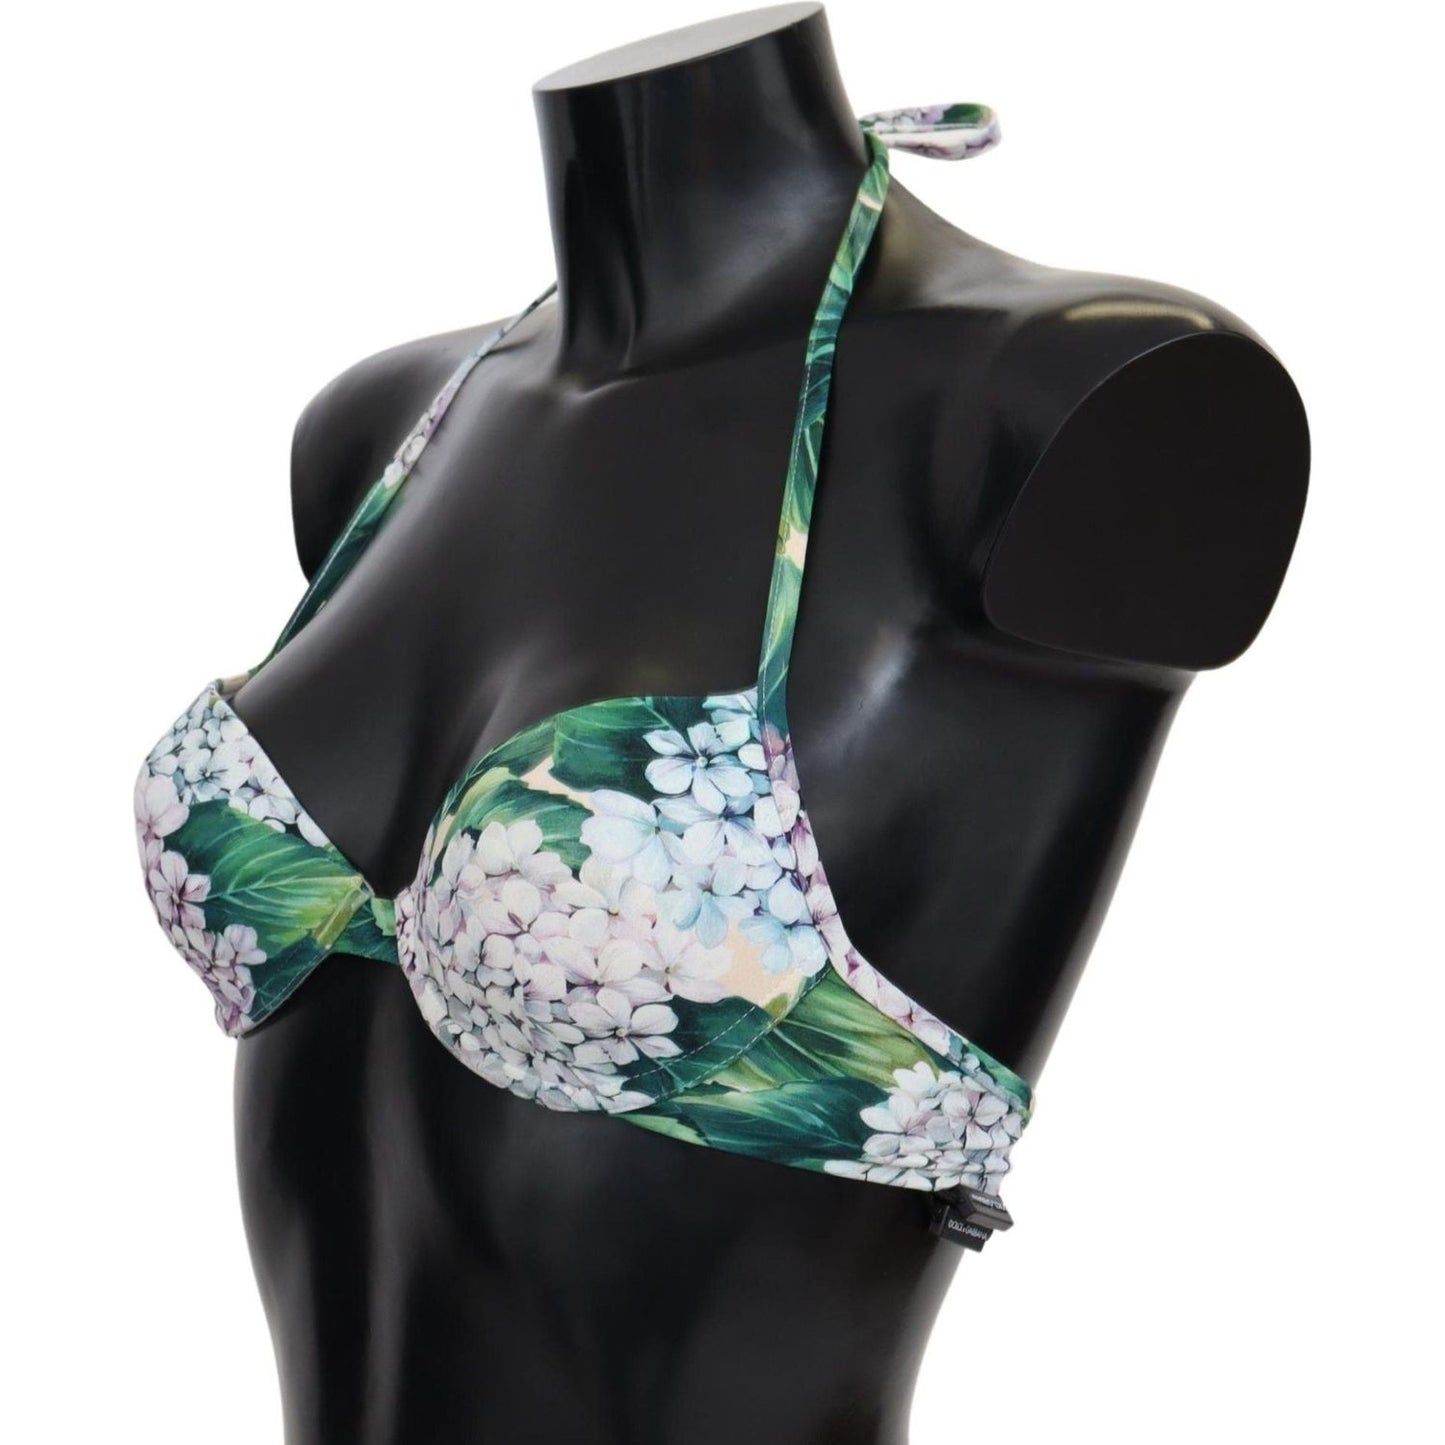 Dolce & Gabbana Chic Floral Bikini Top - Summer Swimwear Delight multicolor-floral-print-beachwear-bikini-tops-1